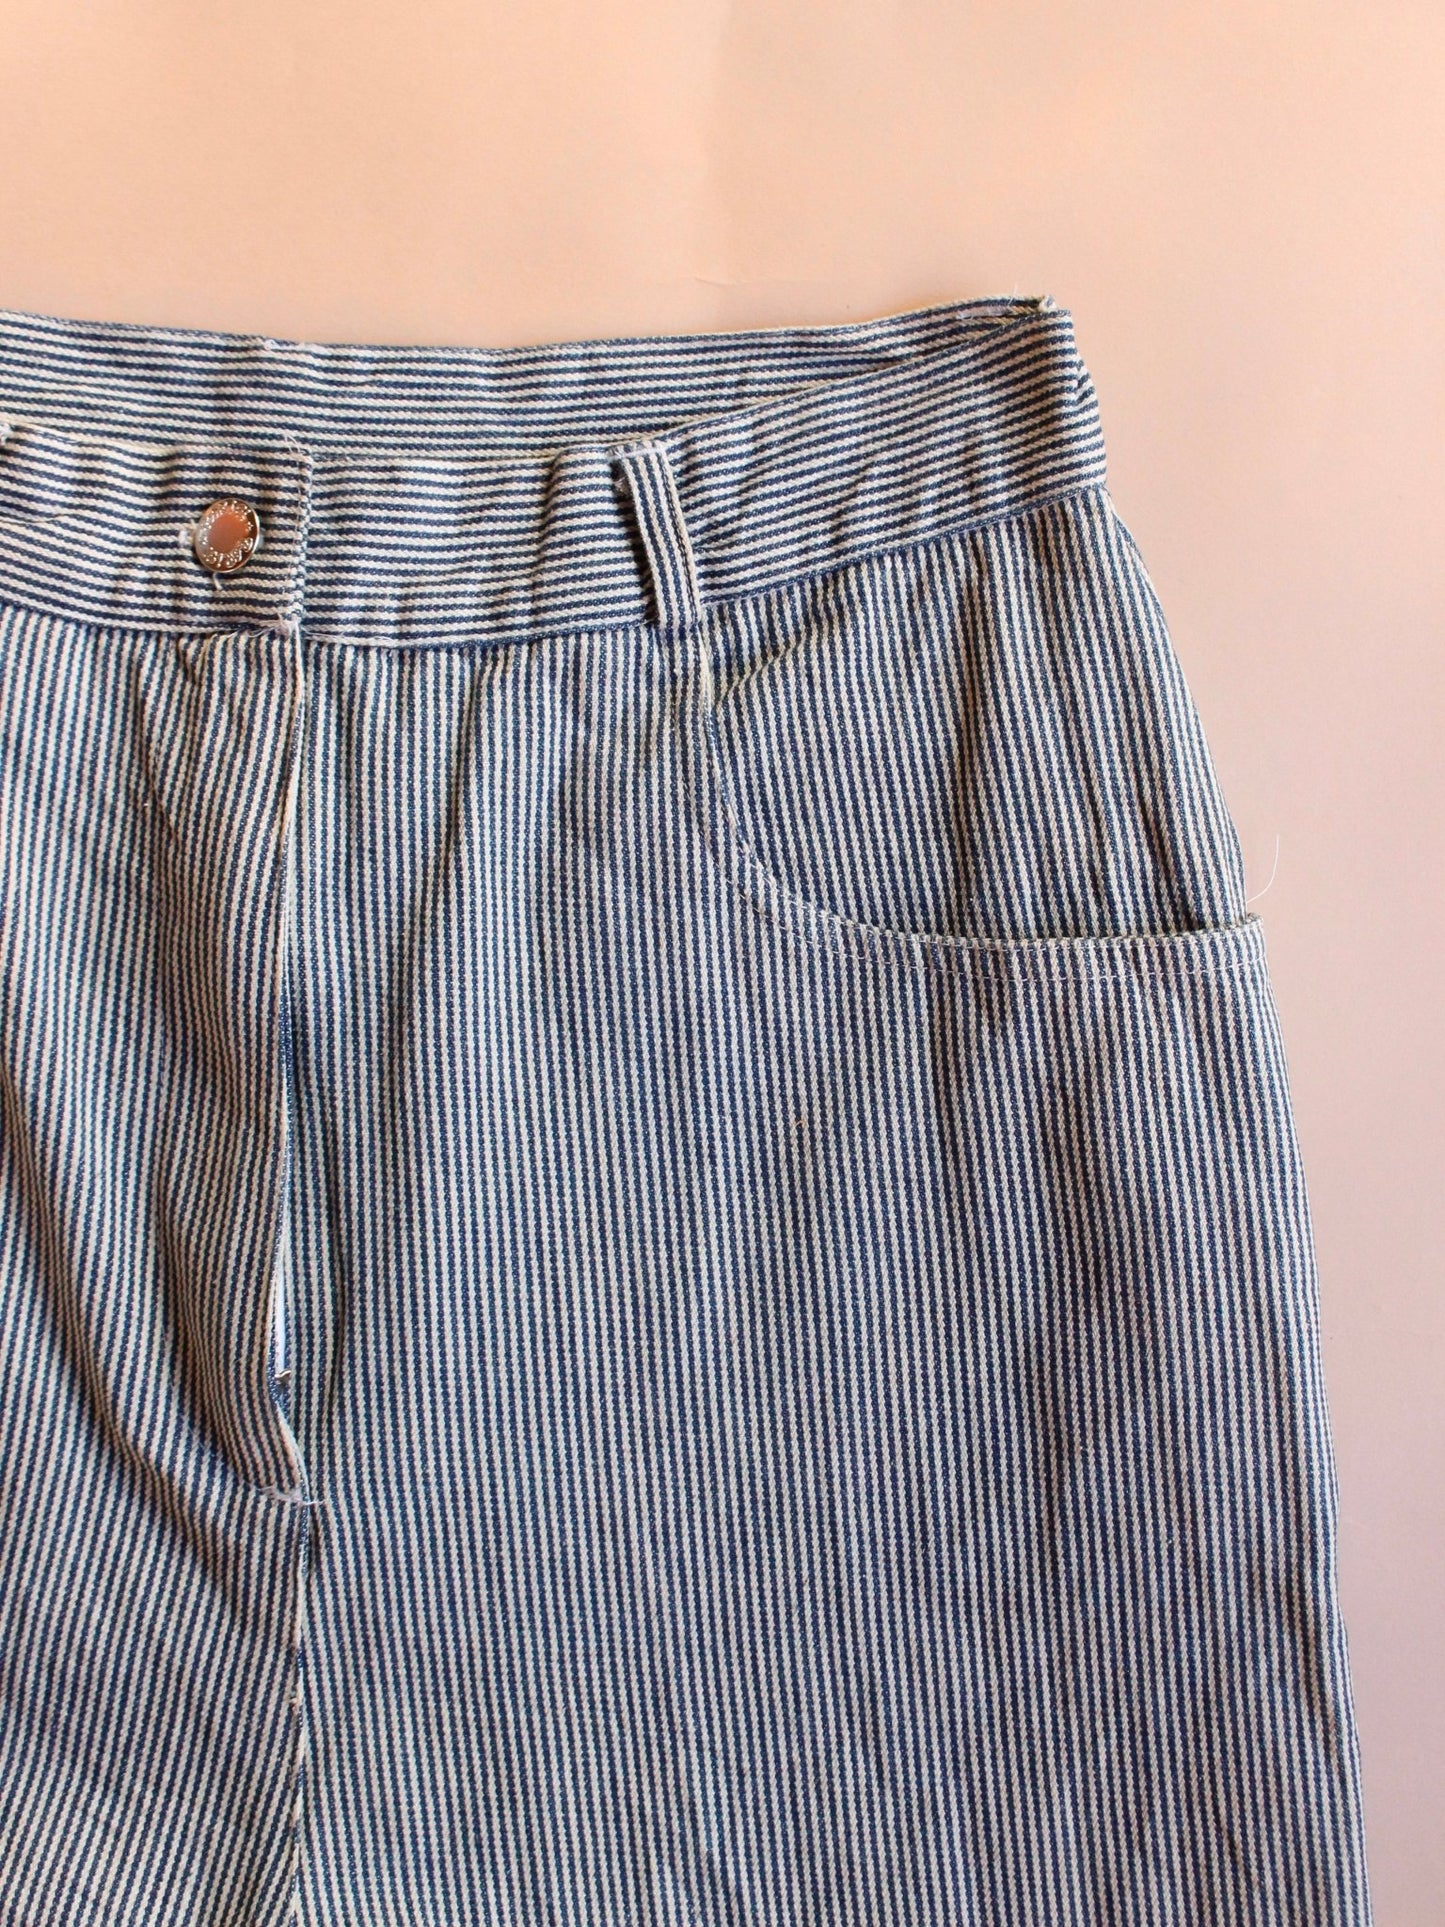 1980s Hickory Striped Denim Pants